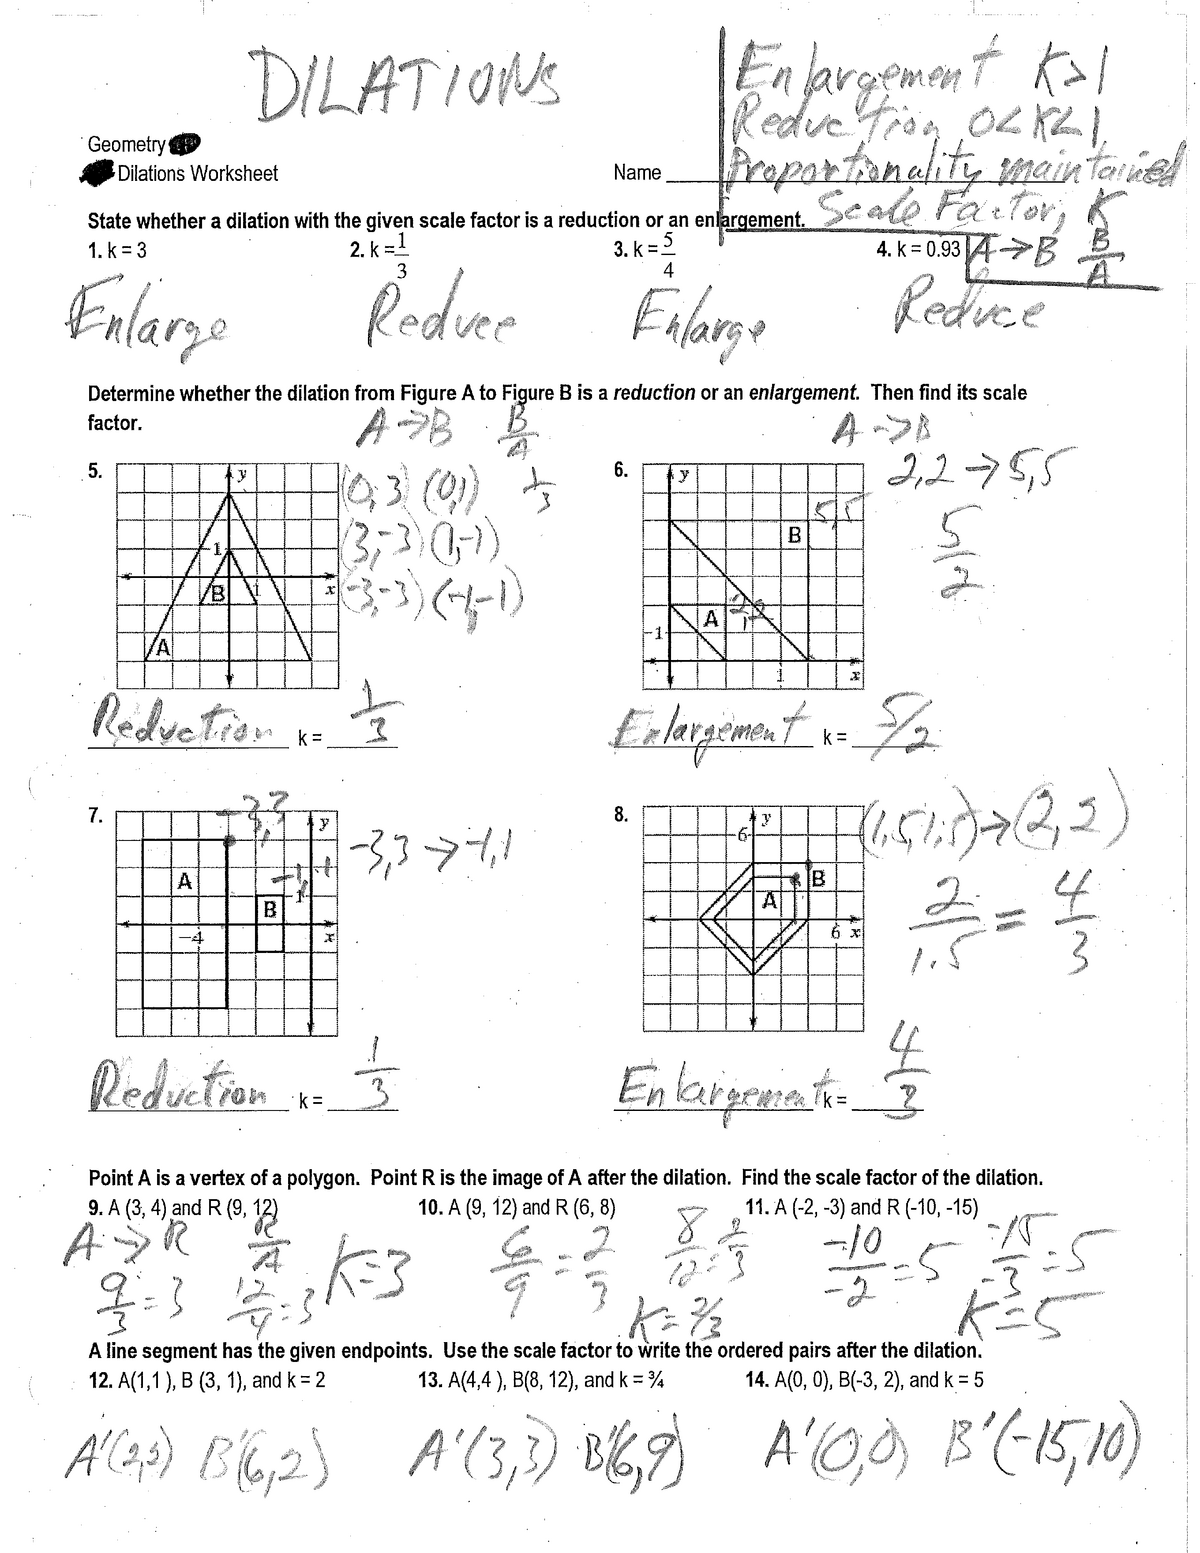 Dilations Worksheet Final KEY - GEO22 - Geometry - StuDocu Within Dilations Worksheet Answer Key